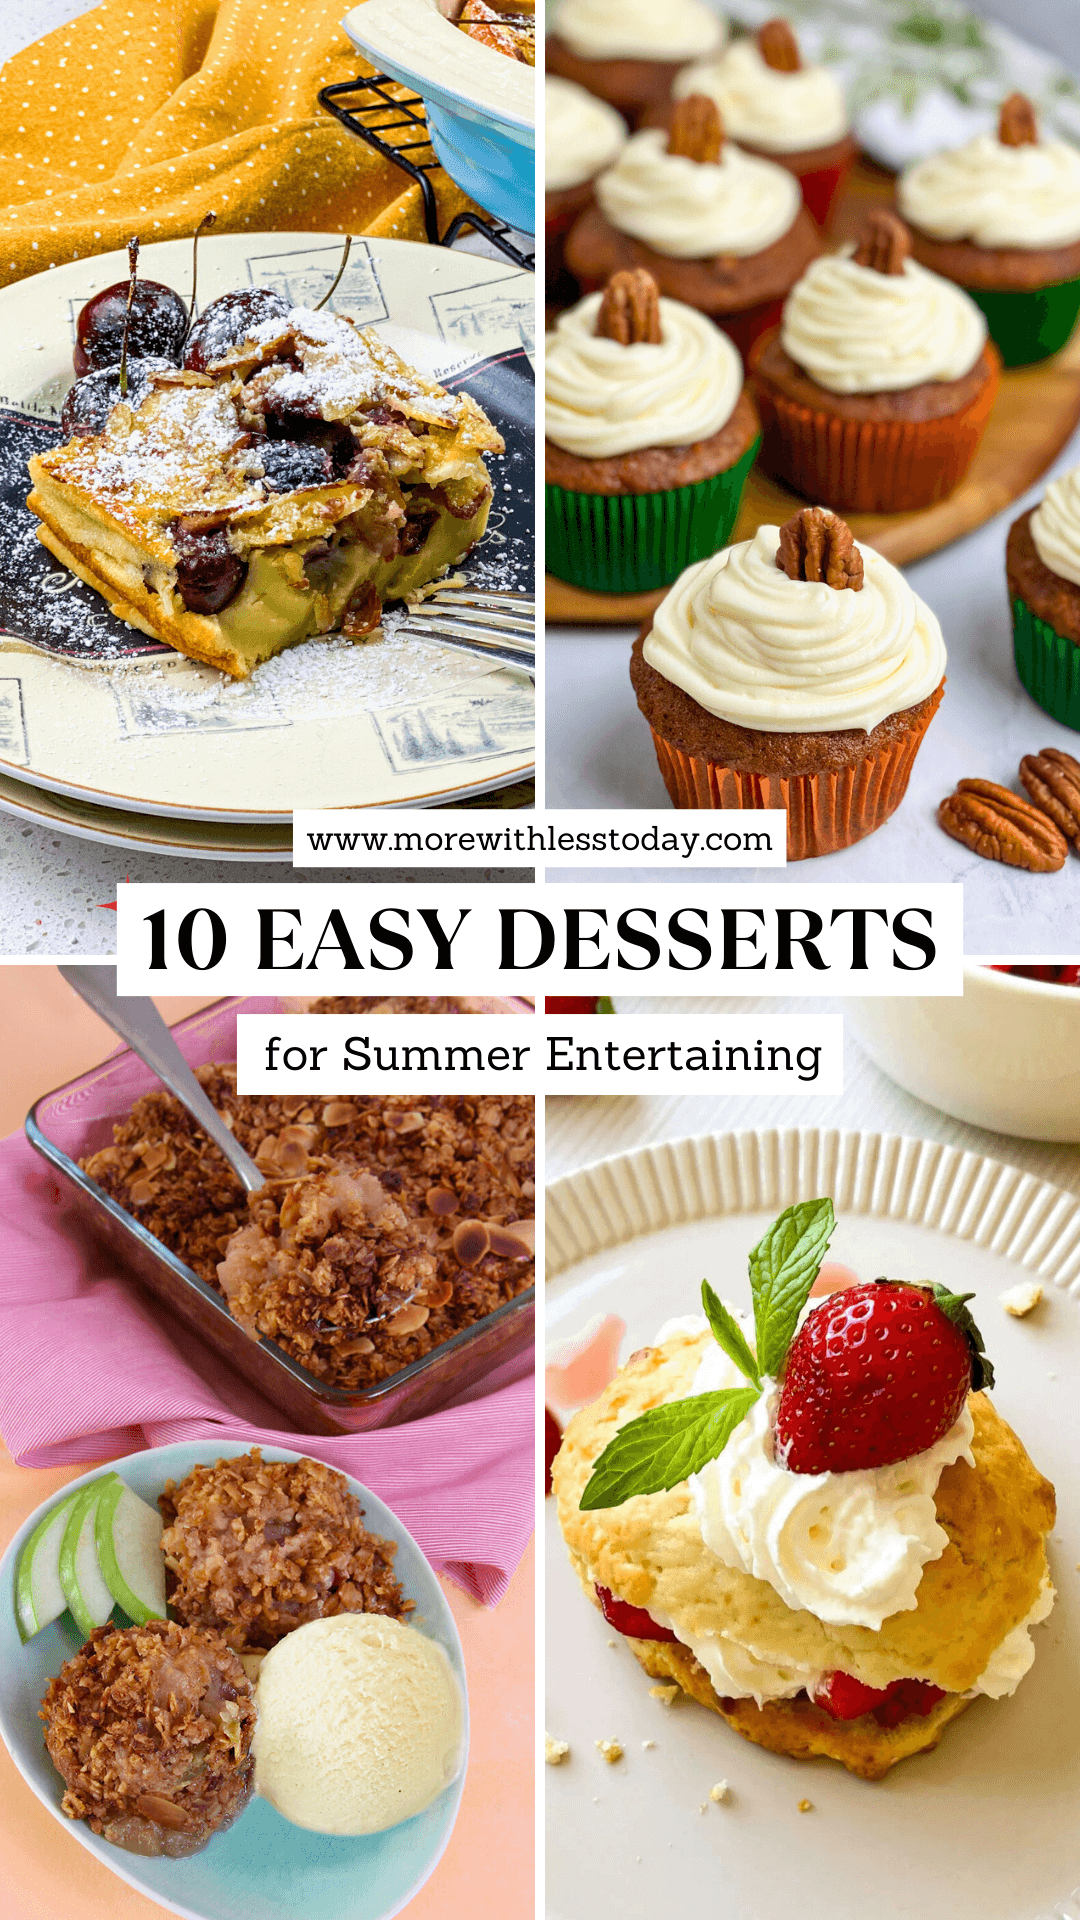 10 Easy Desserts for Summer Entertaining - PIN